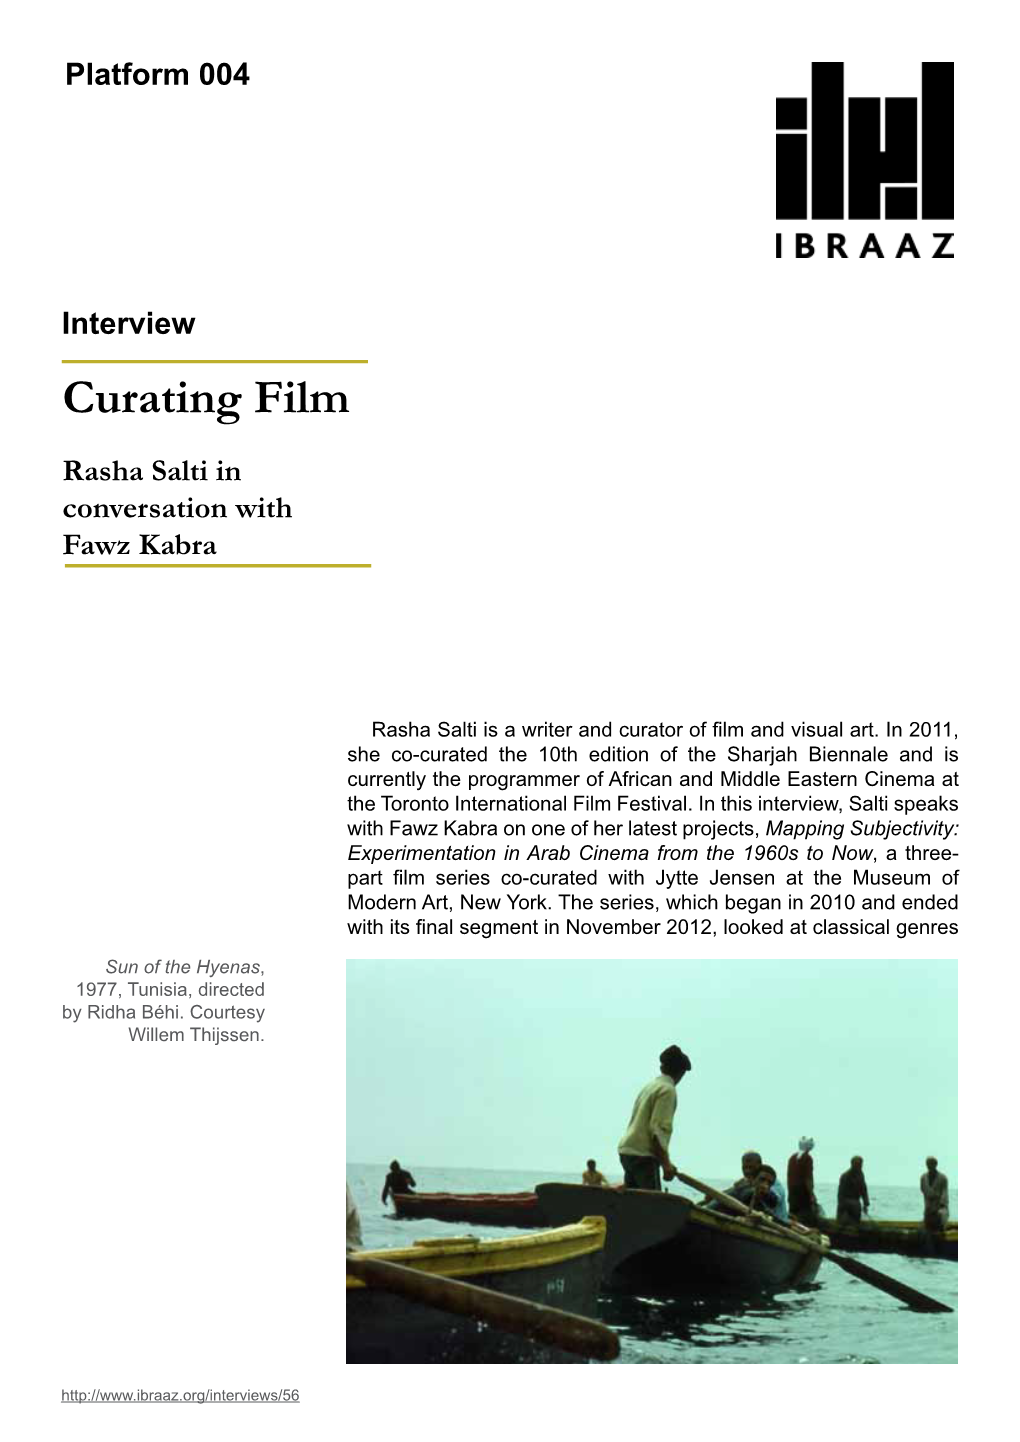 Curating Film